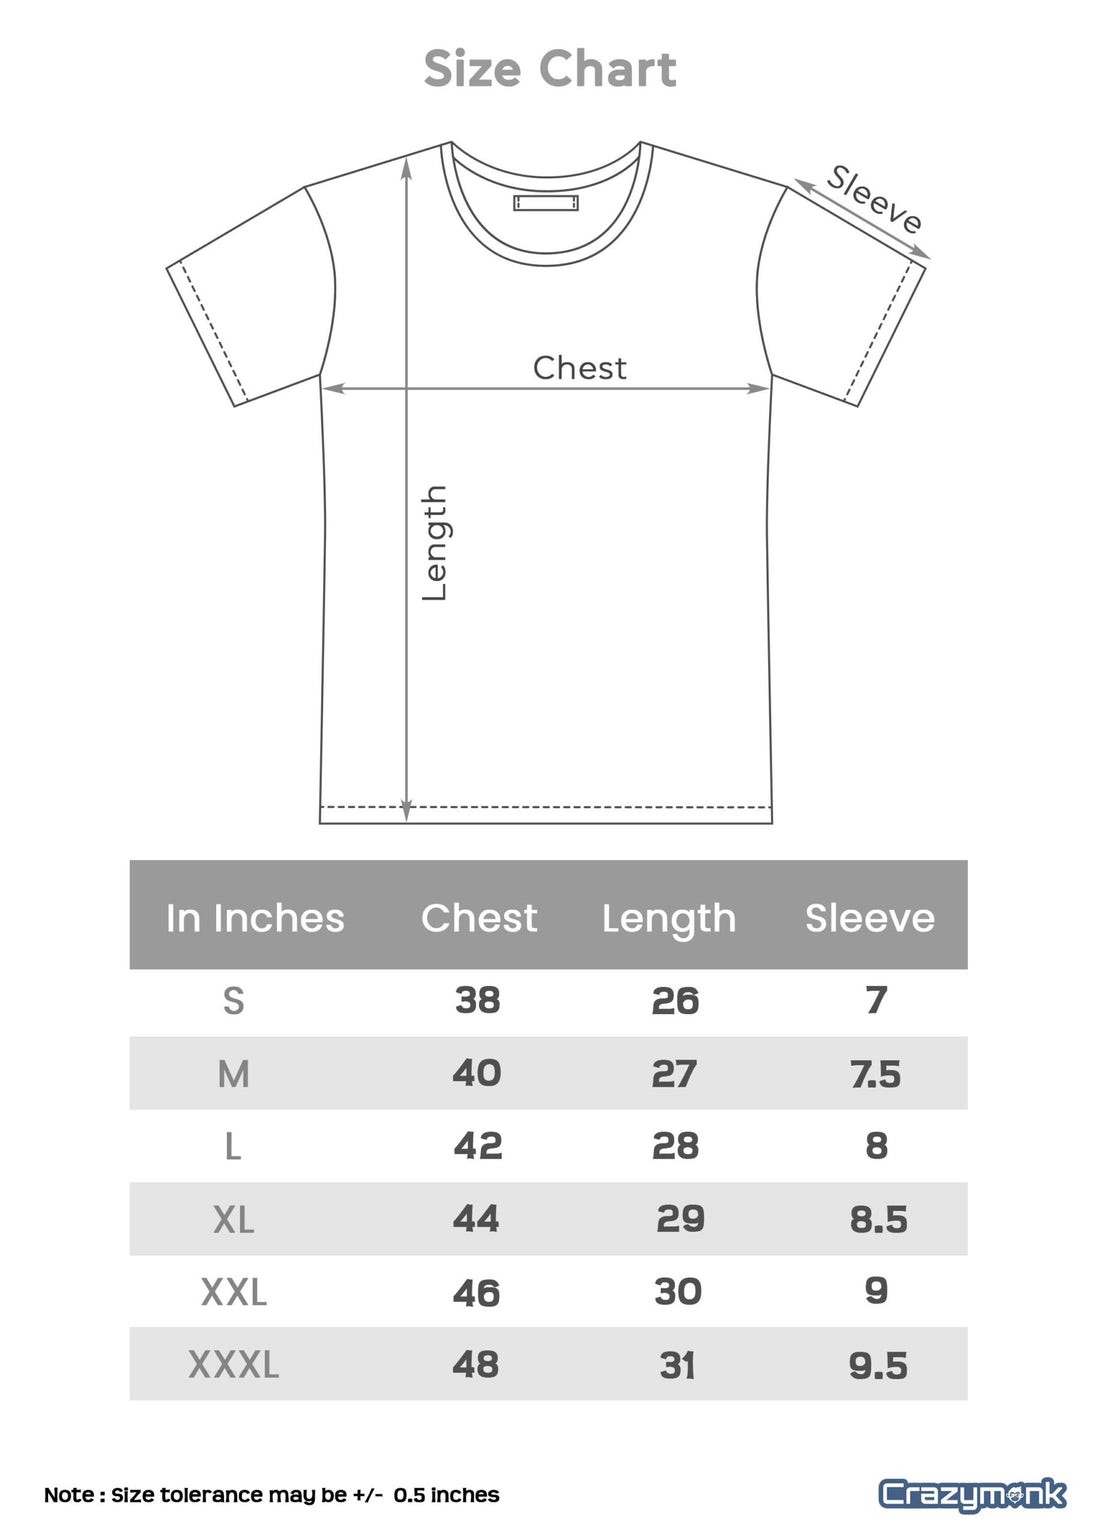 Google Unisex Half Sleeve T-Shirt